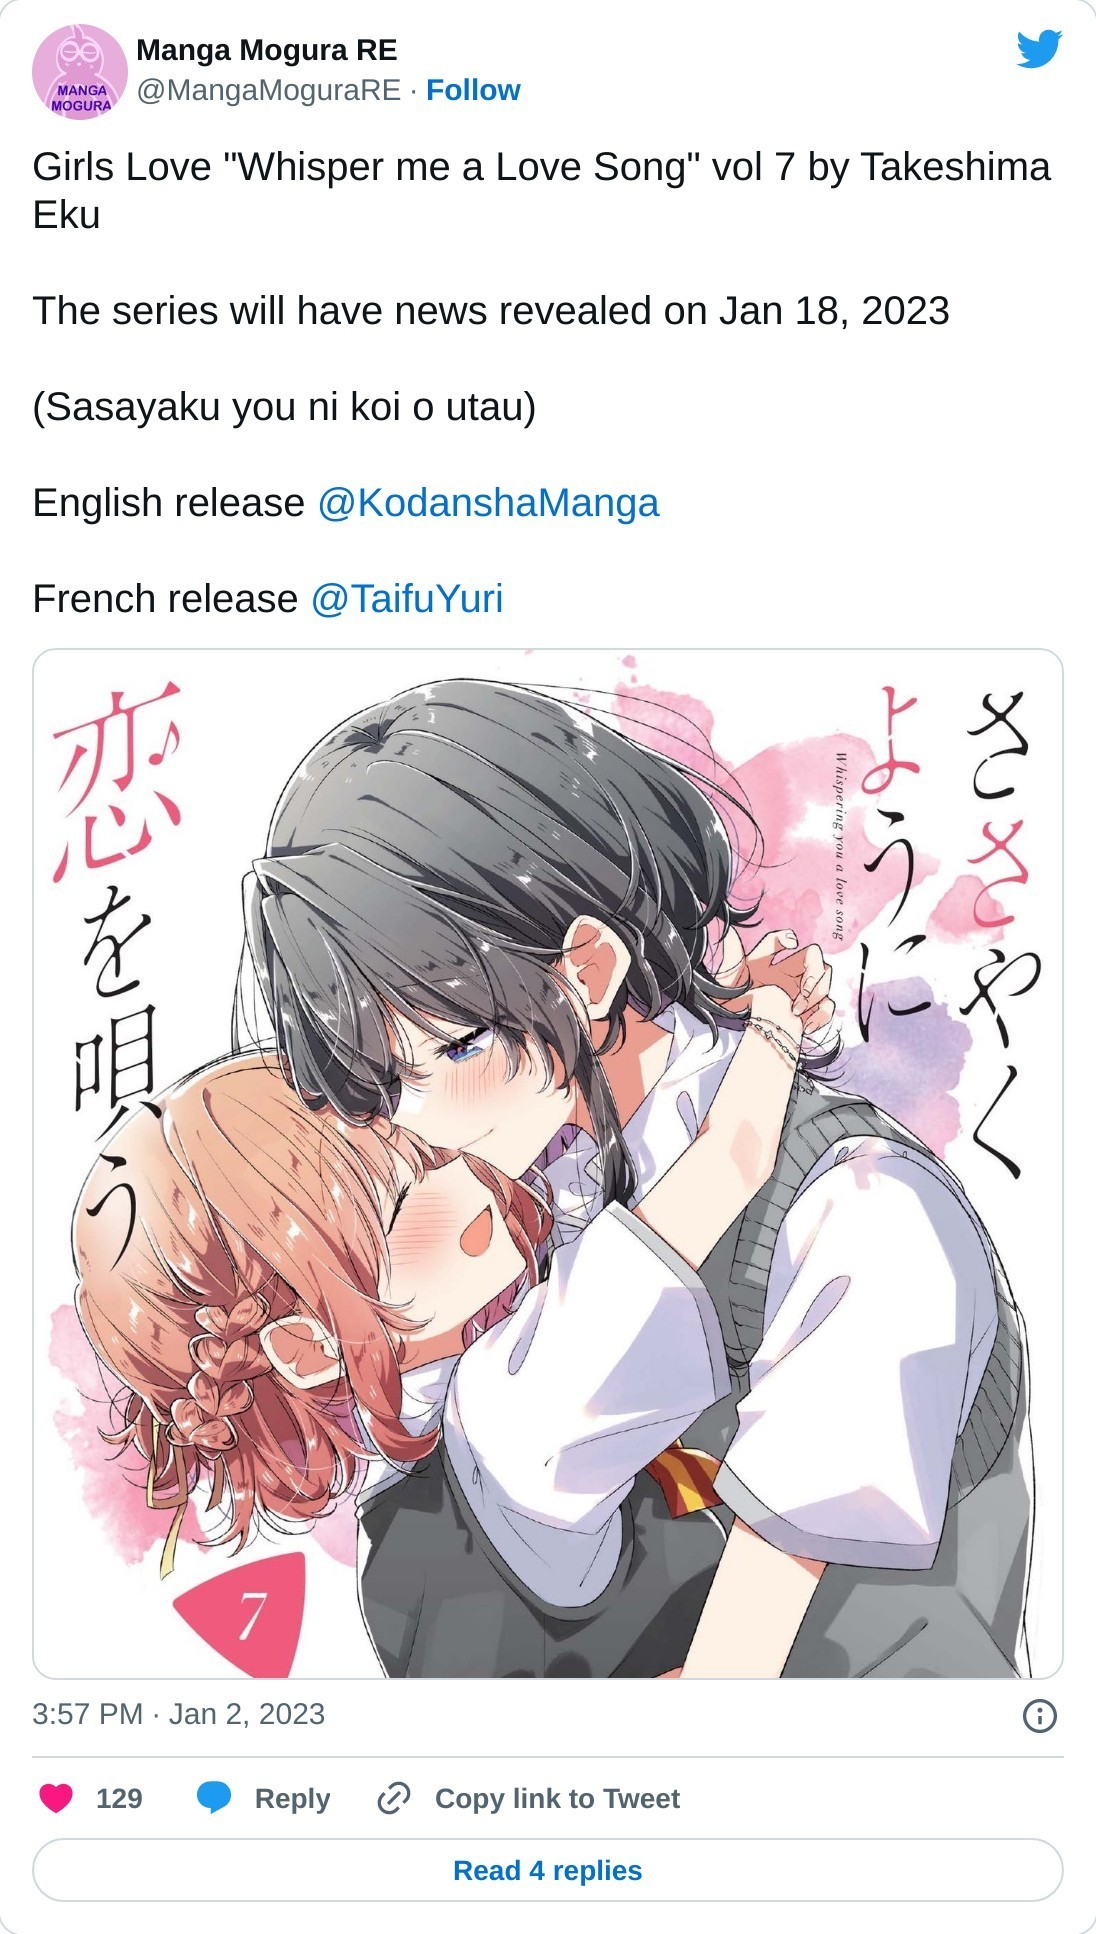 Manga Mogura RE (Manga & Anime News) on X: Also the french